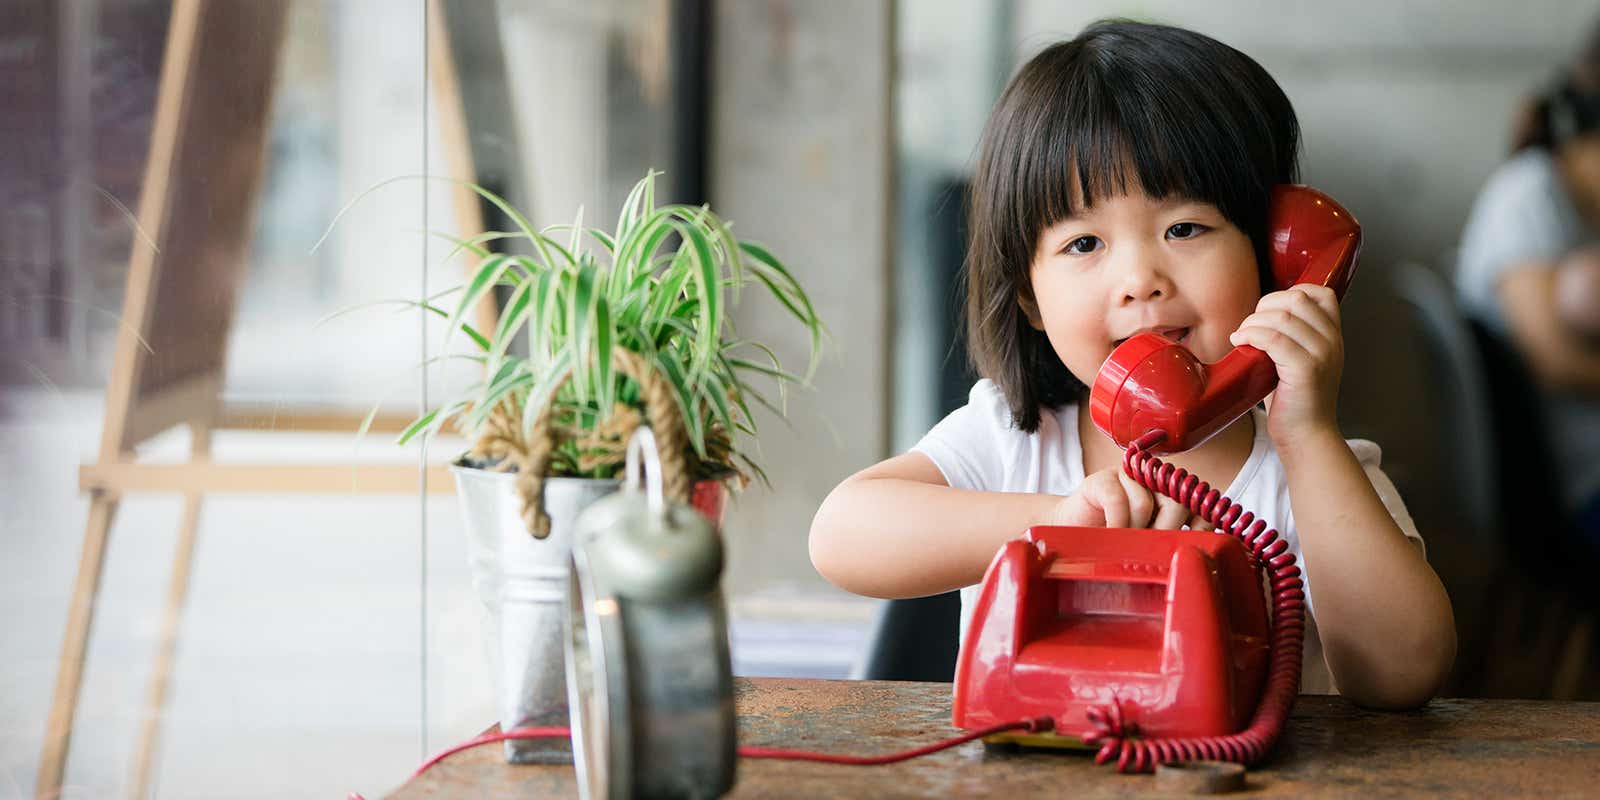 girl using an old rotary landline phone